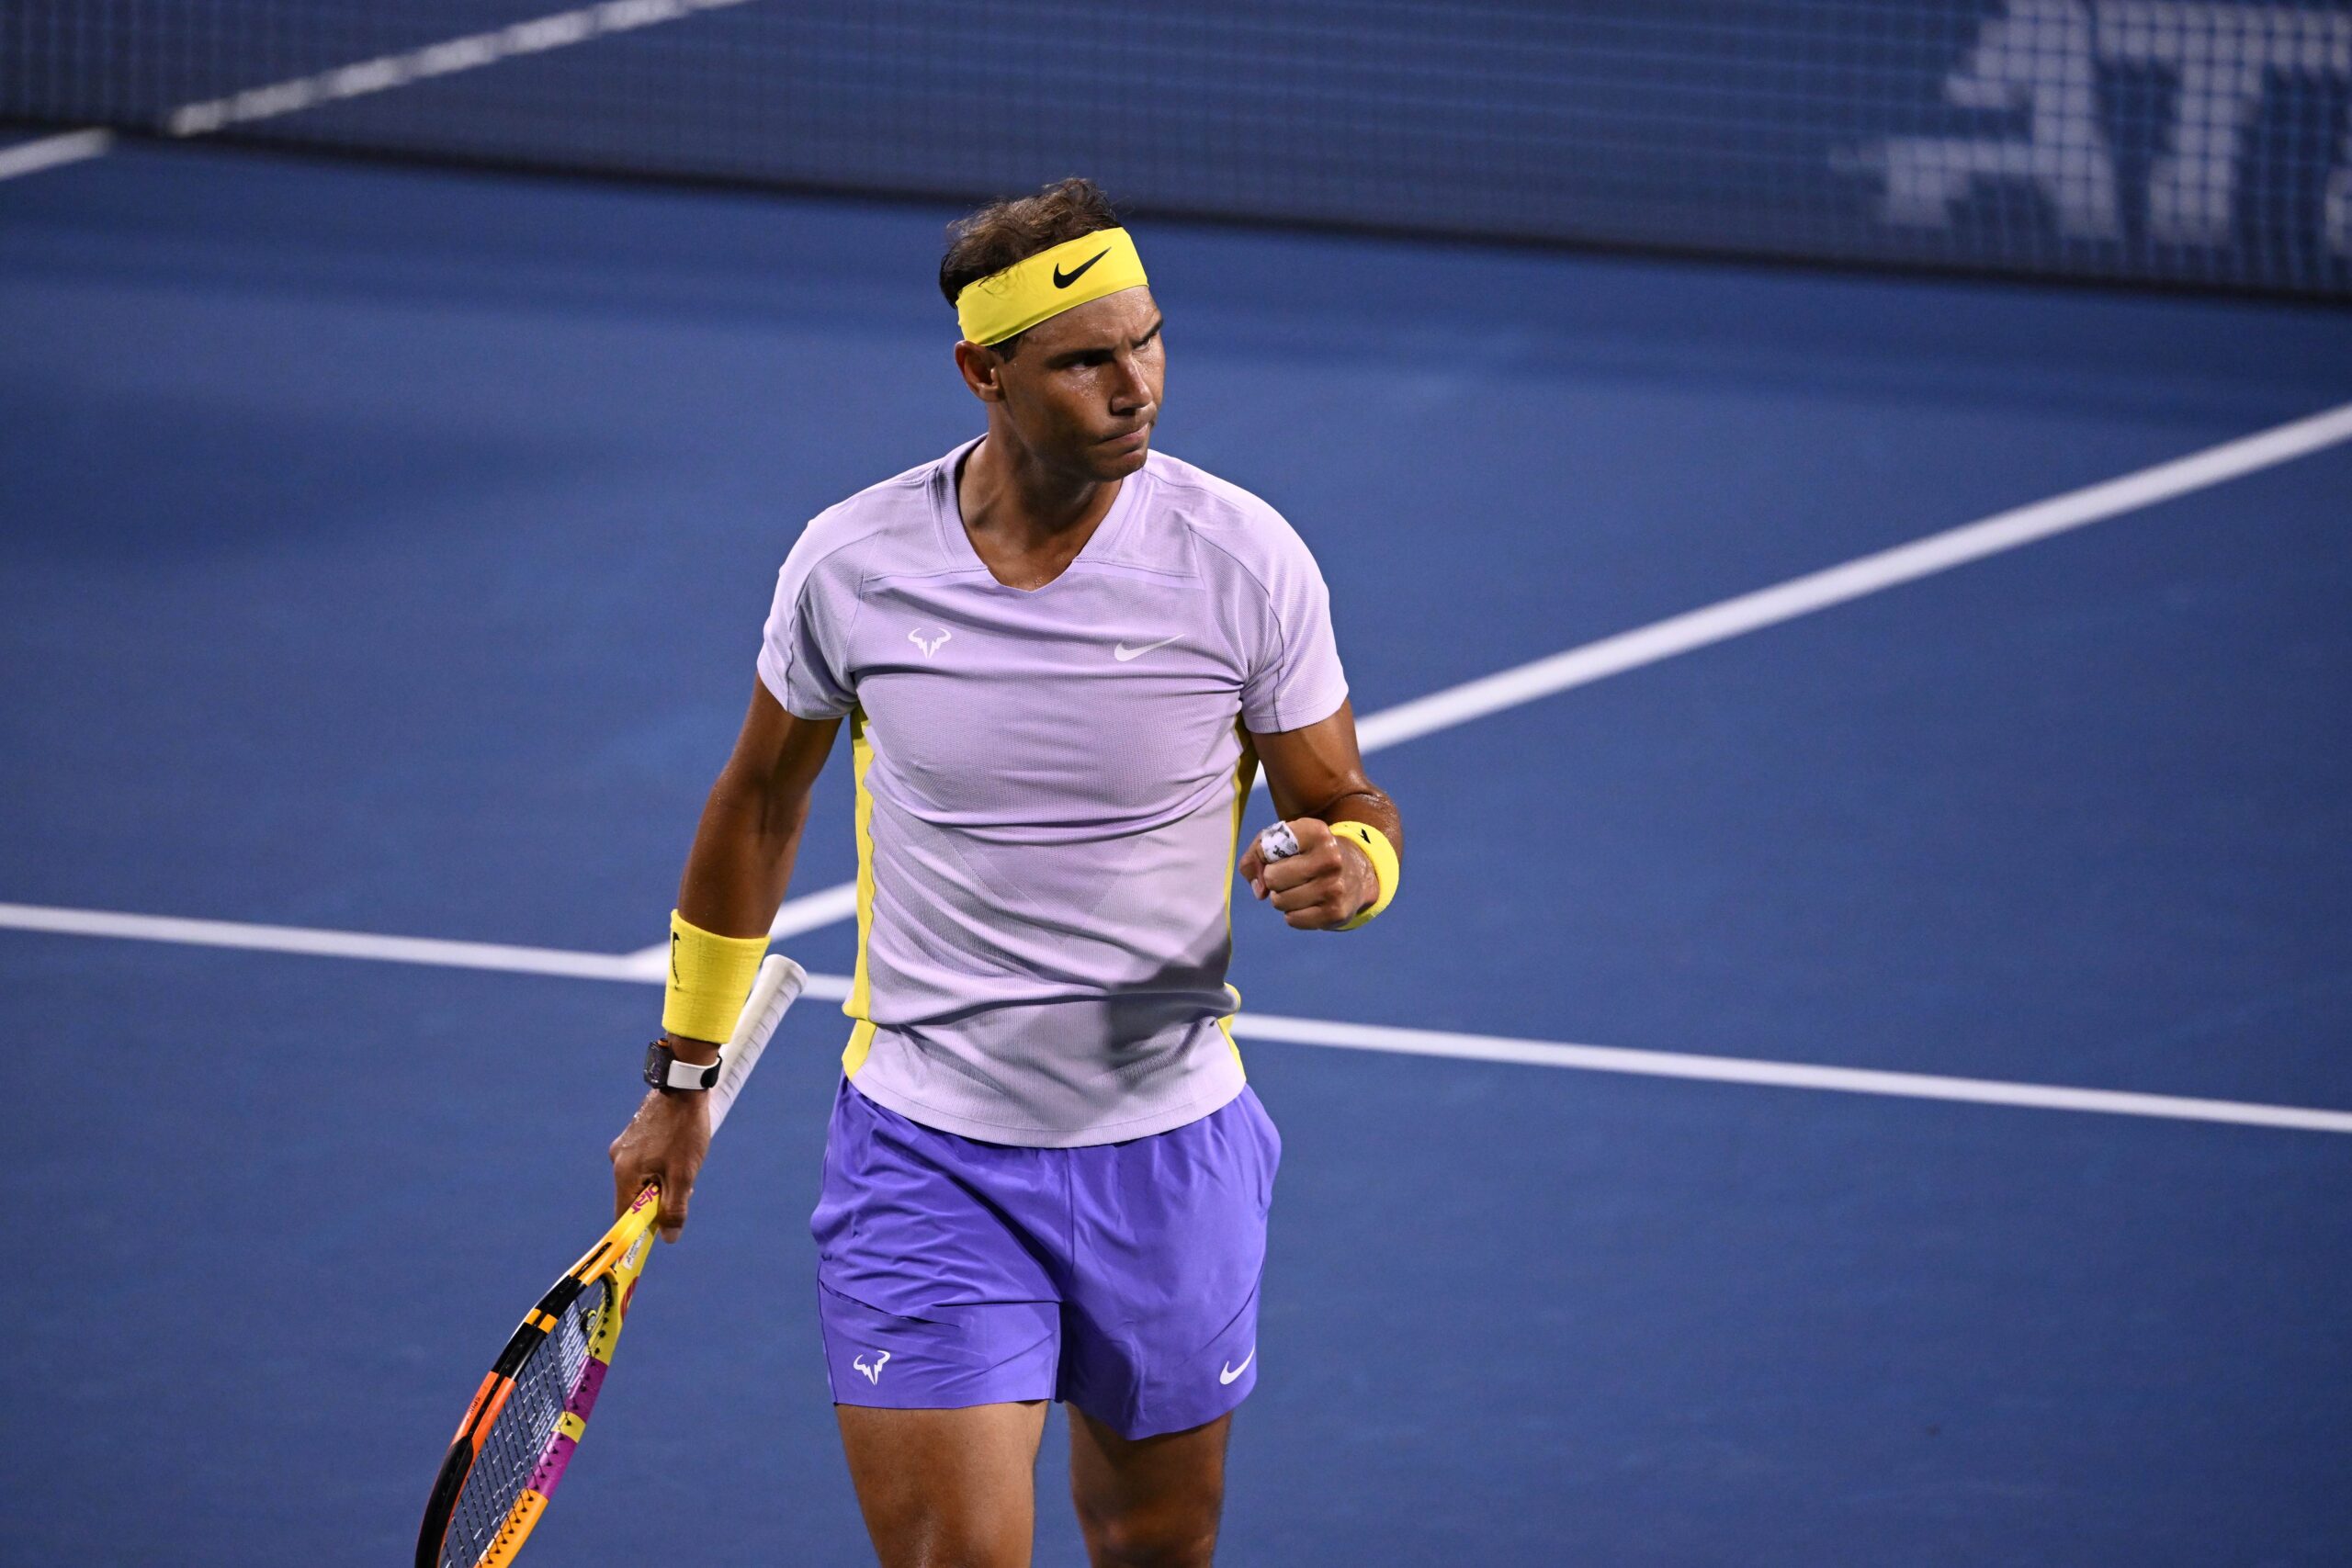 Rafael Nadal fist bumping at the crowd